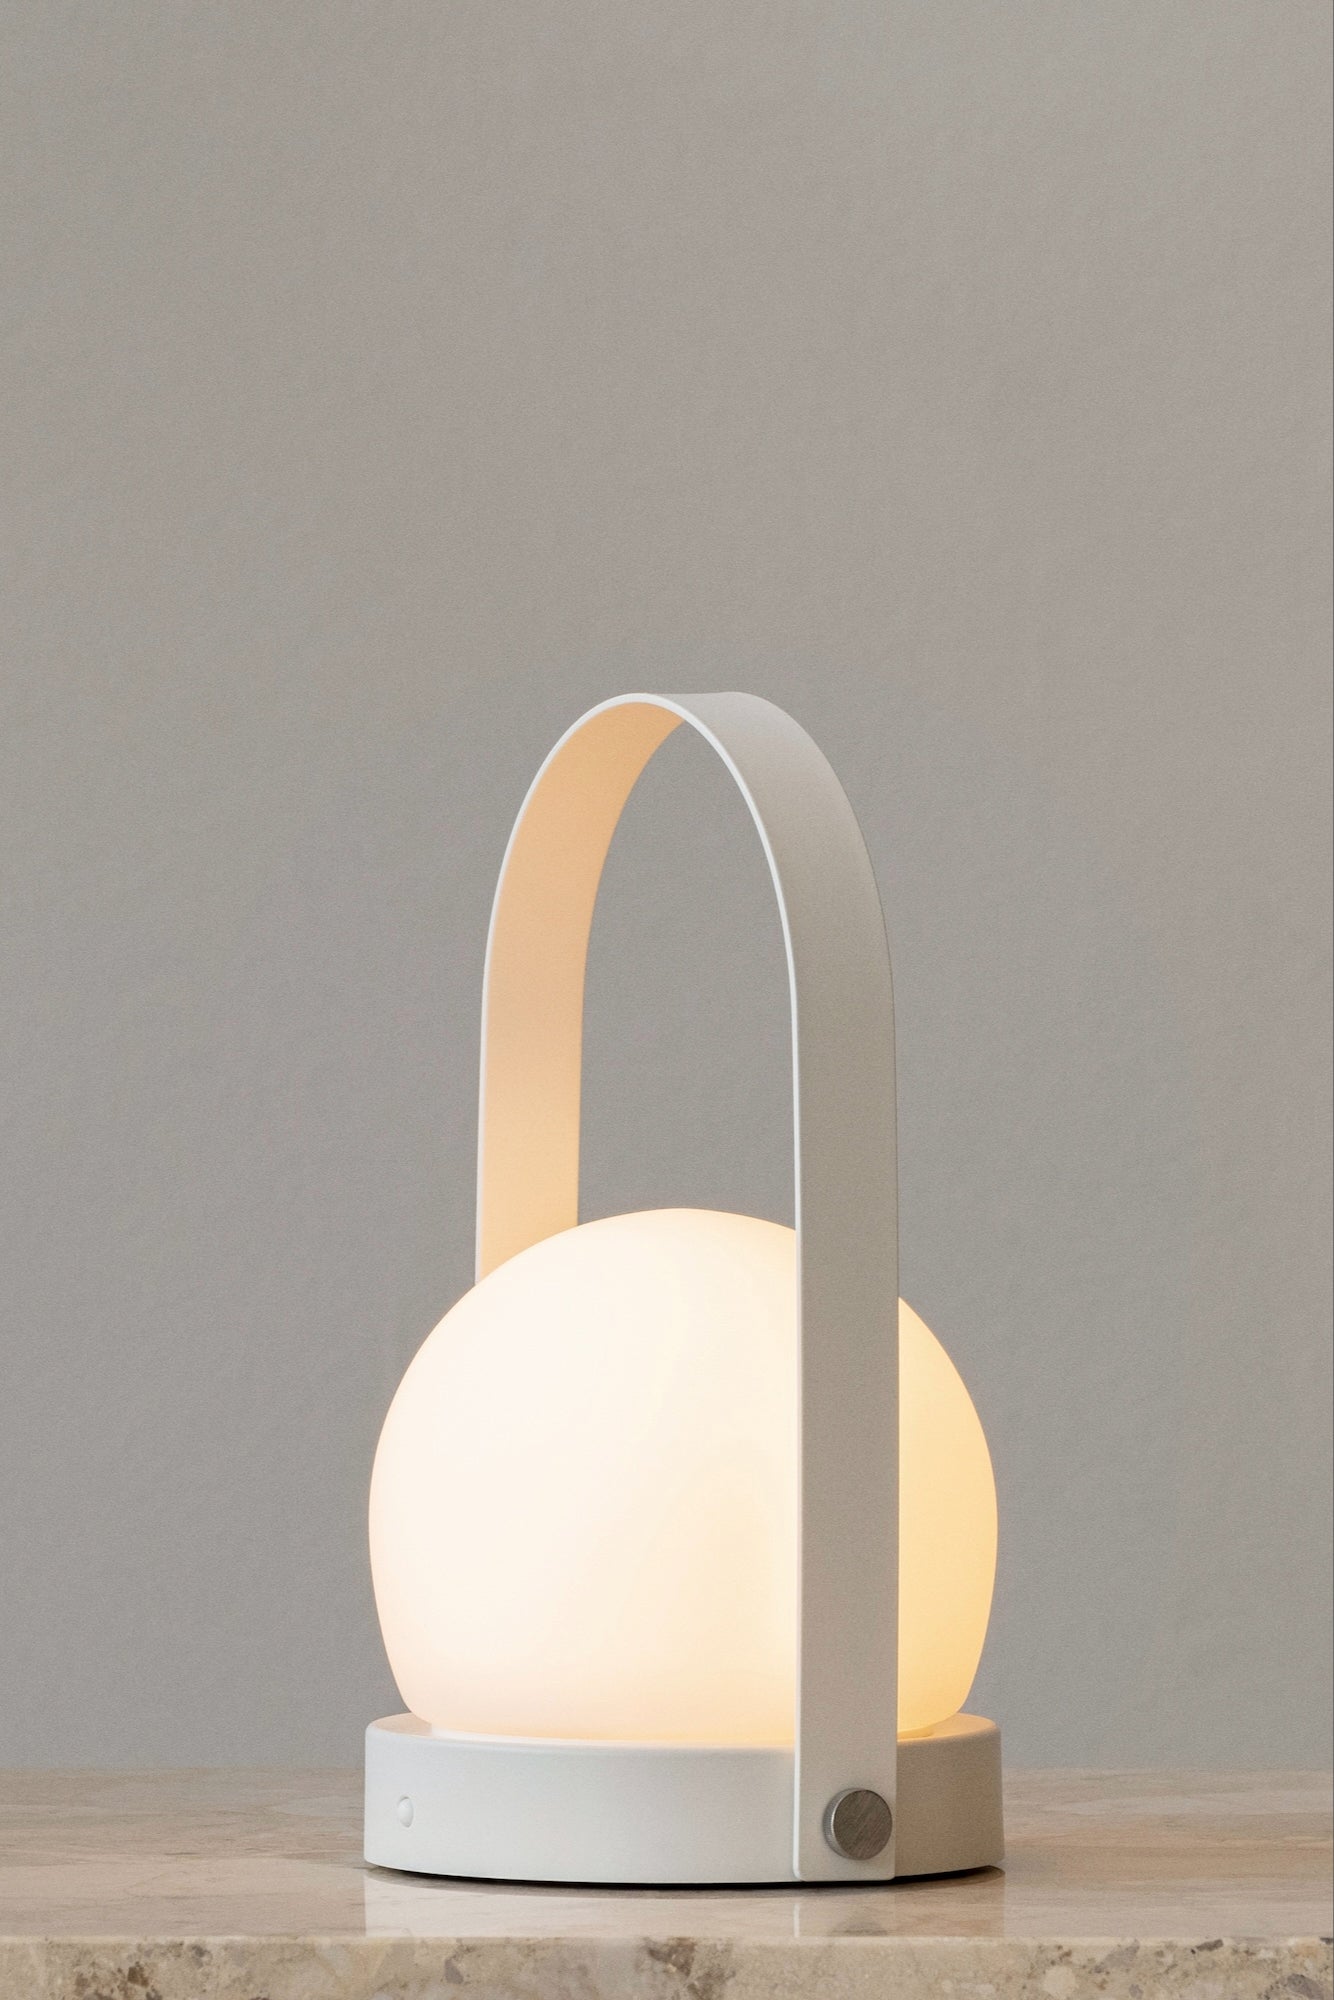 Column Portable Lamp White, designed by Norm Architects for Audo Copenhagen (Menu) lights on